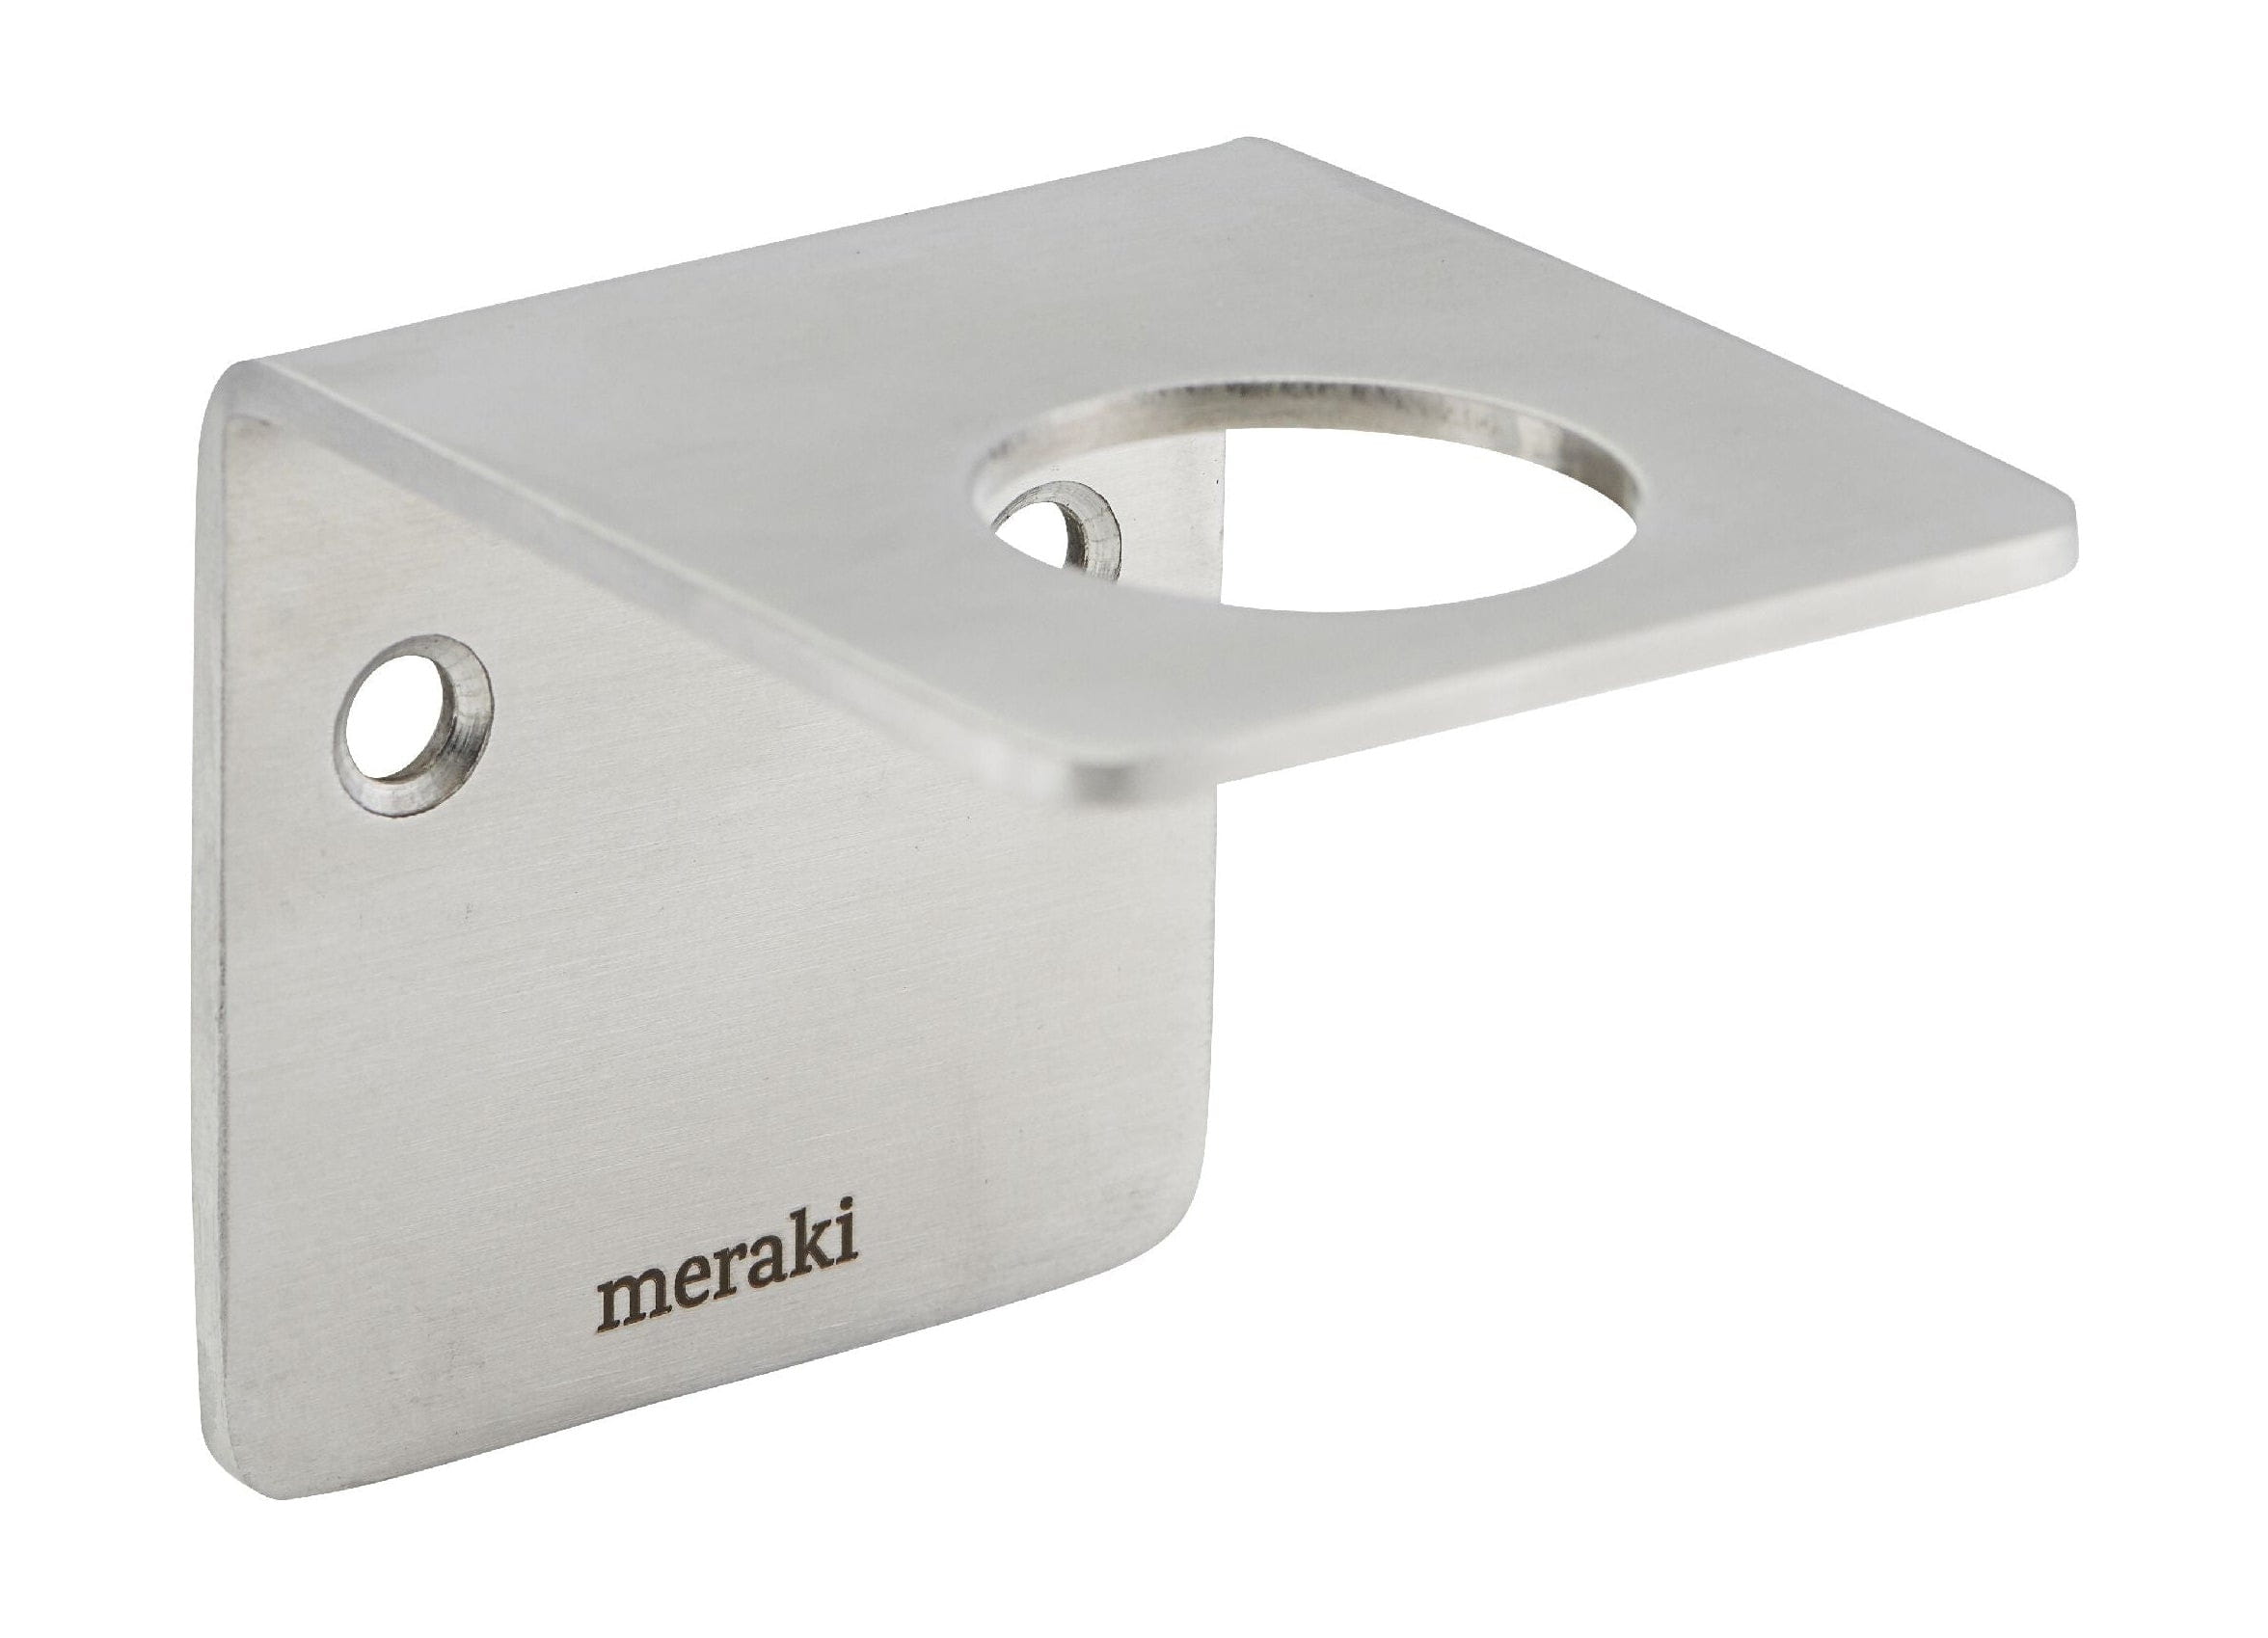 Meraki Väggmontering för 275 ml & 490 ml Meraki Produkter, borstad silverfinish